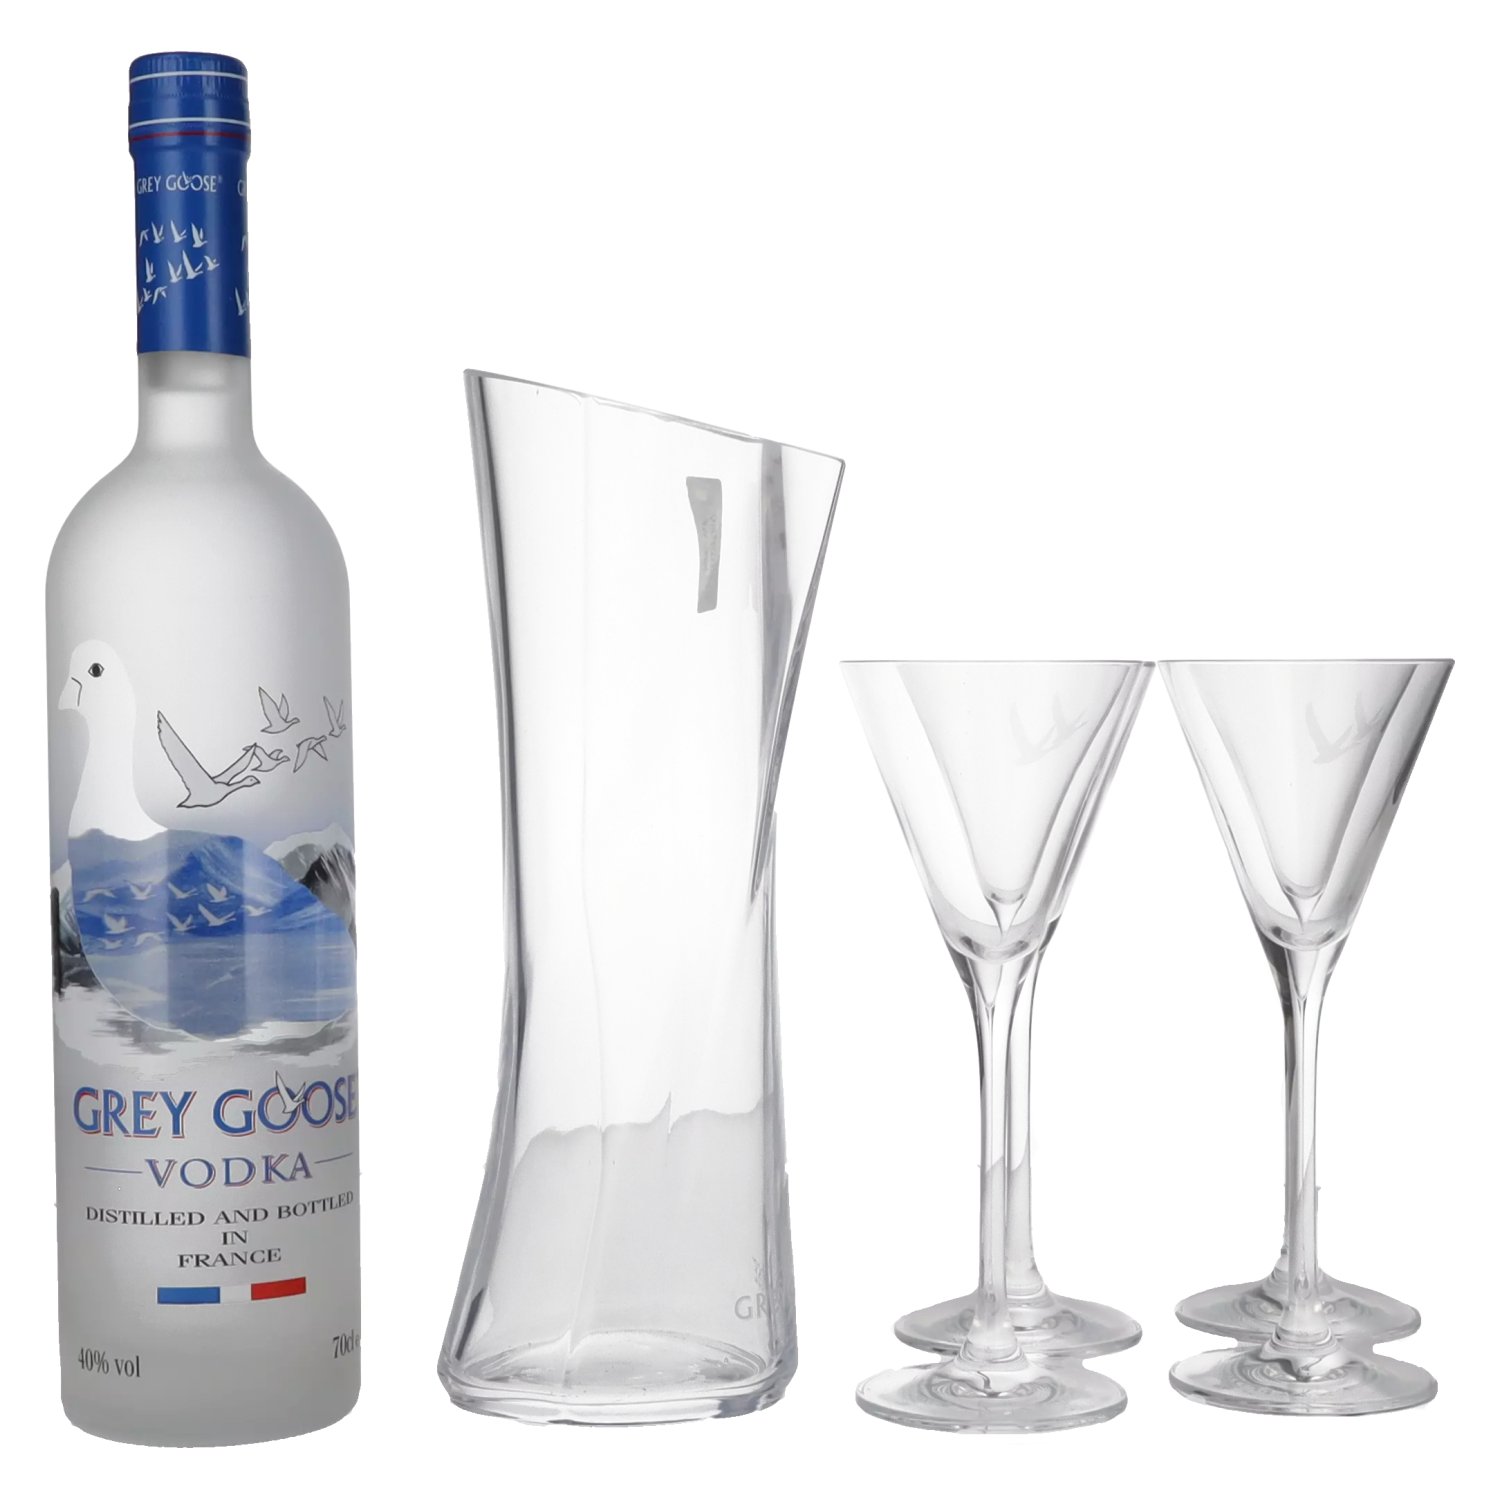 Grey Goose Vodka THE ULTIMATE Holzkiste GOOSE GREY 40% 0,7l Vol. in MARTINI Pack